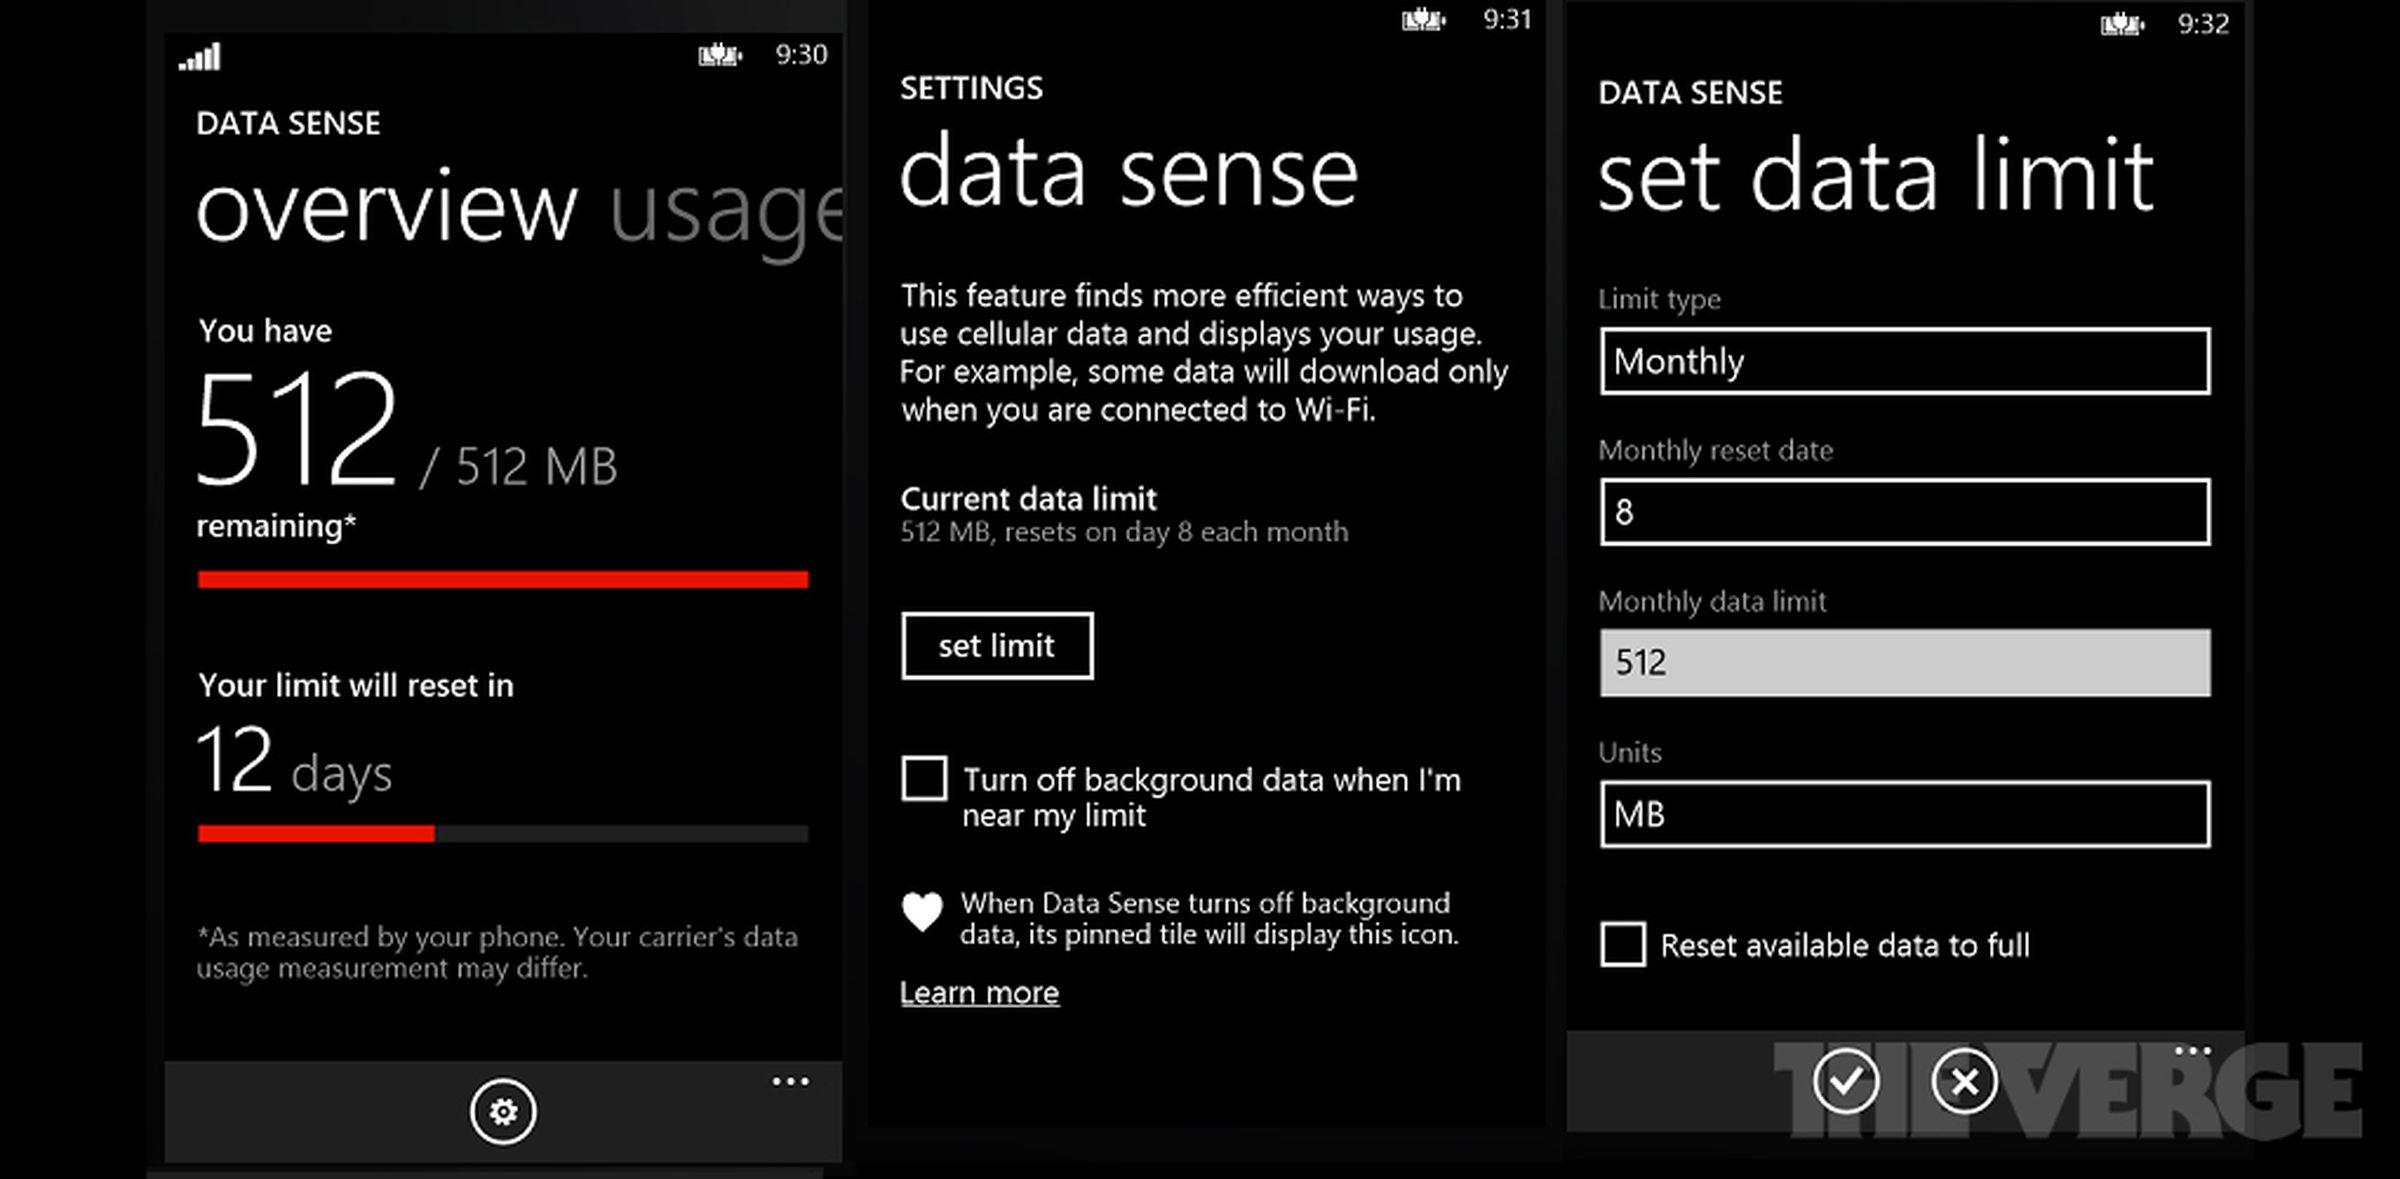 Windows Phone 8 SDK screenshots